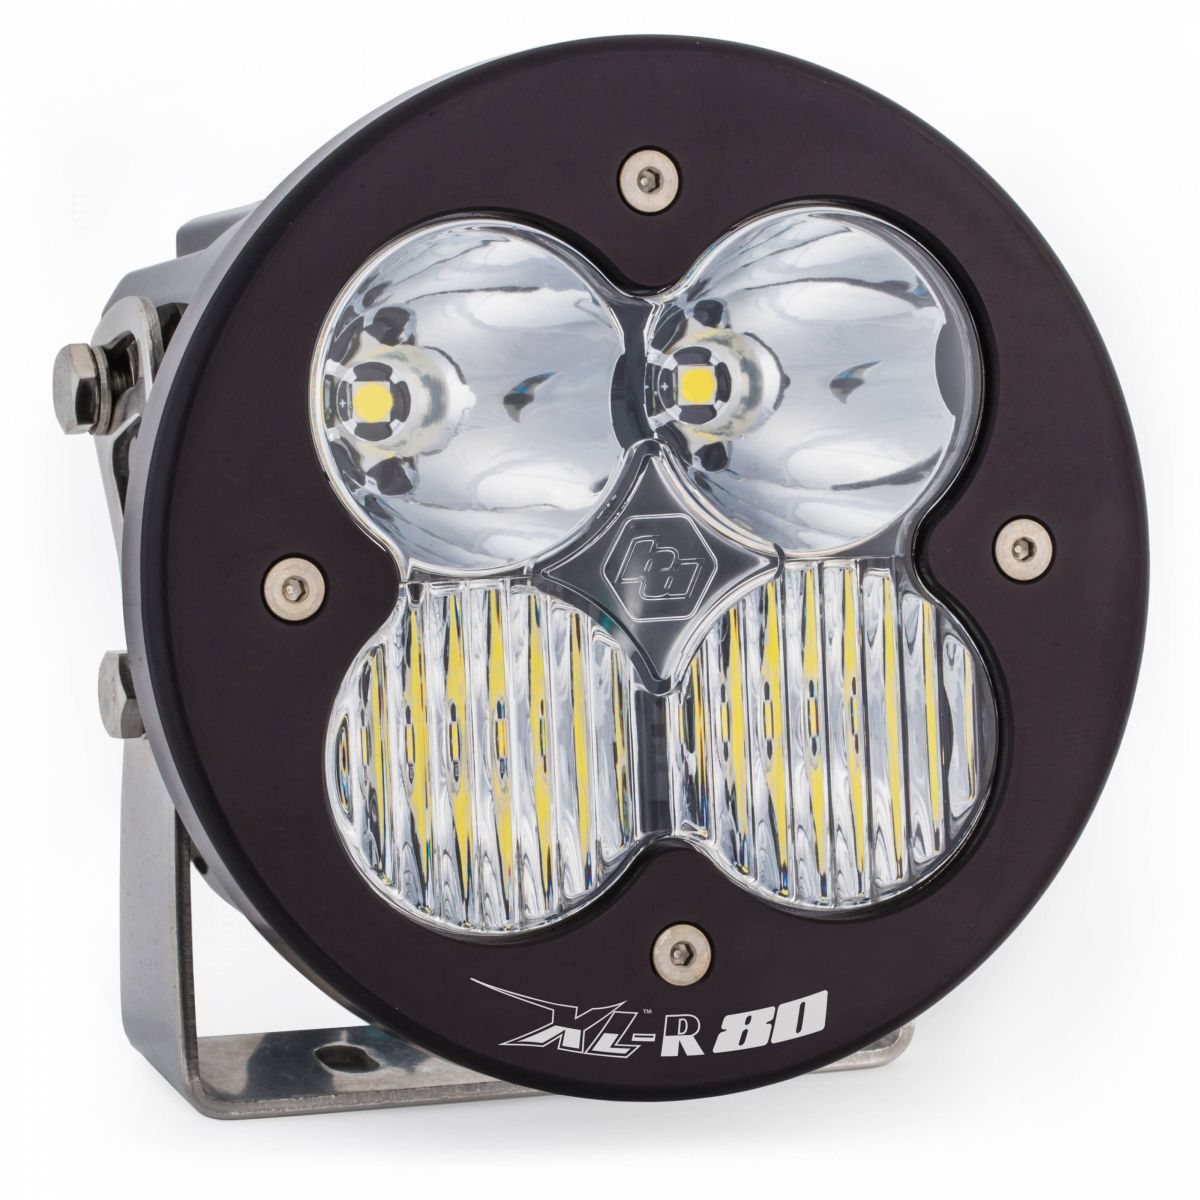 Baja Designs - Baja Designs XL-R 80 LED Clear Driving/Combo Light Pod 9,500 Lumens - Round